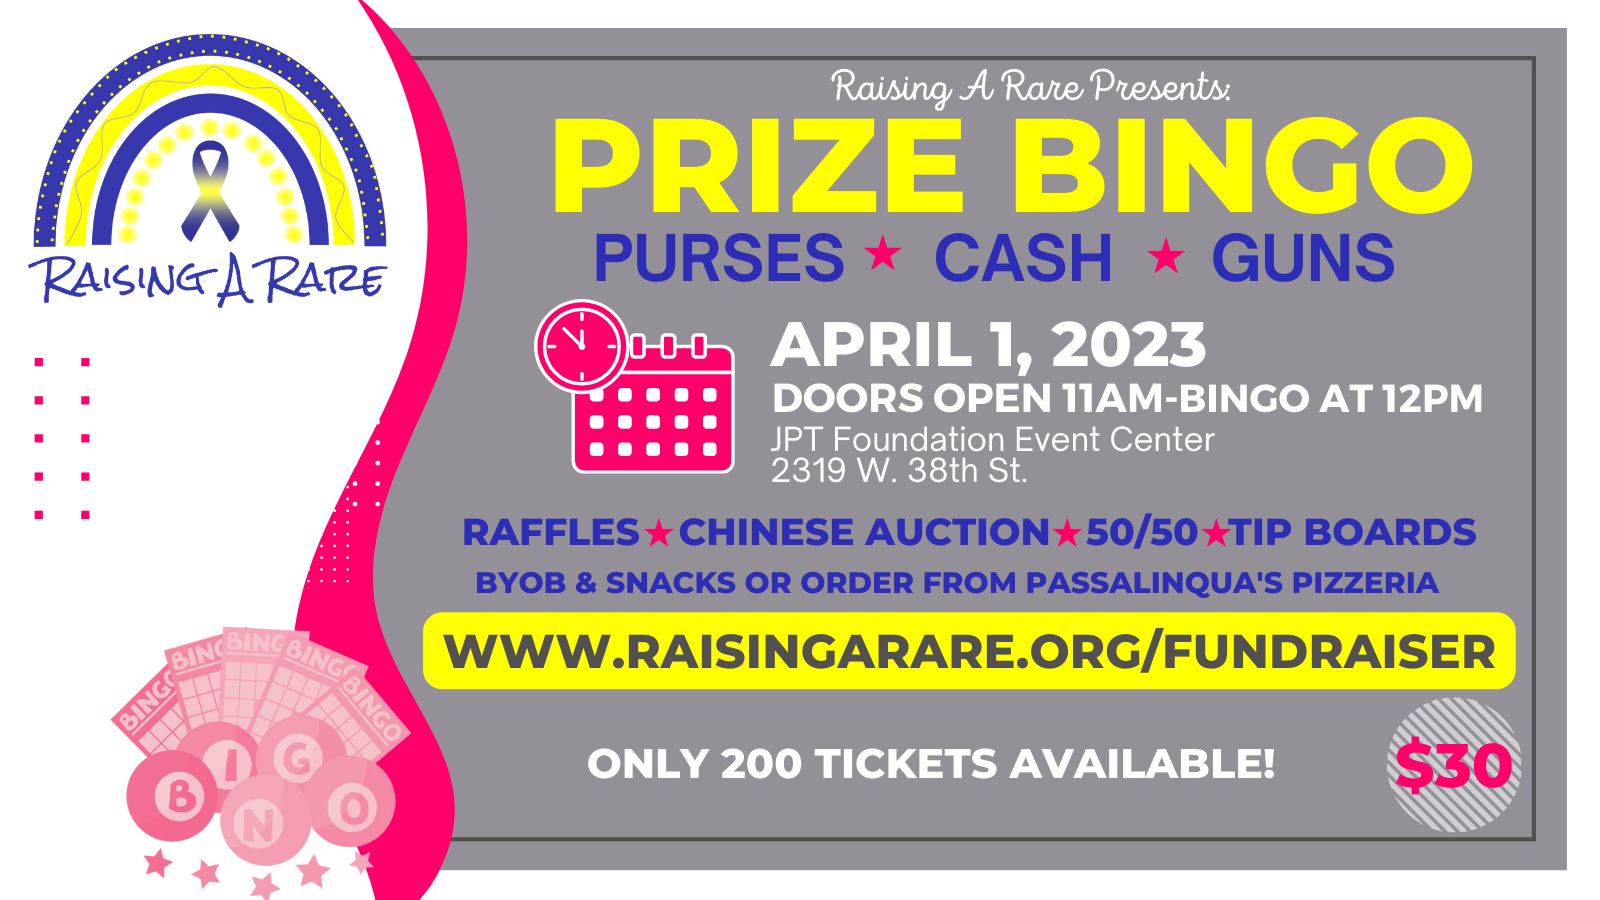 Prize Bingo by Raising A Rare, Erie, Pennsylvania, United States